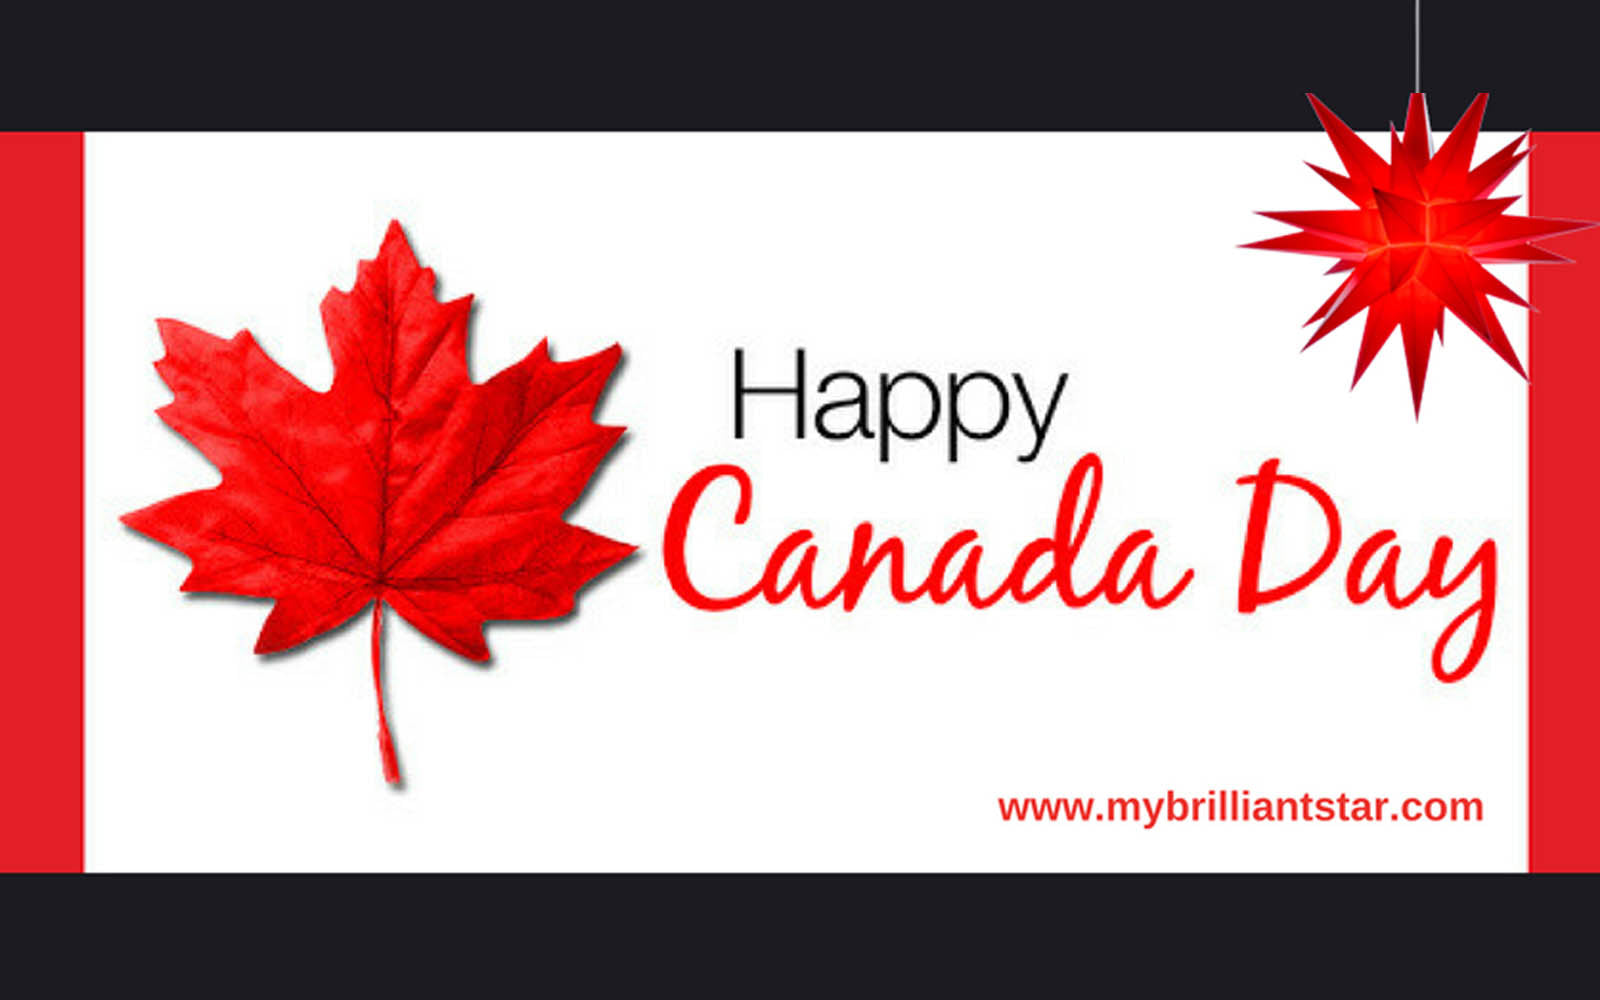 Happy Canada Day 2017